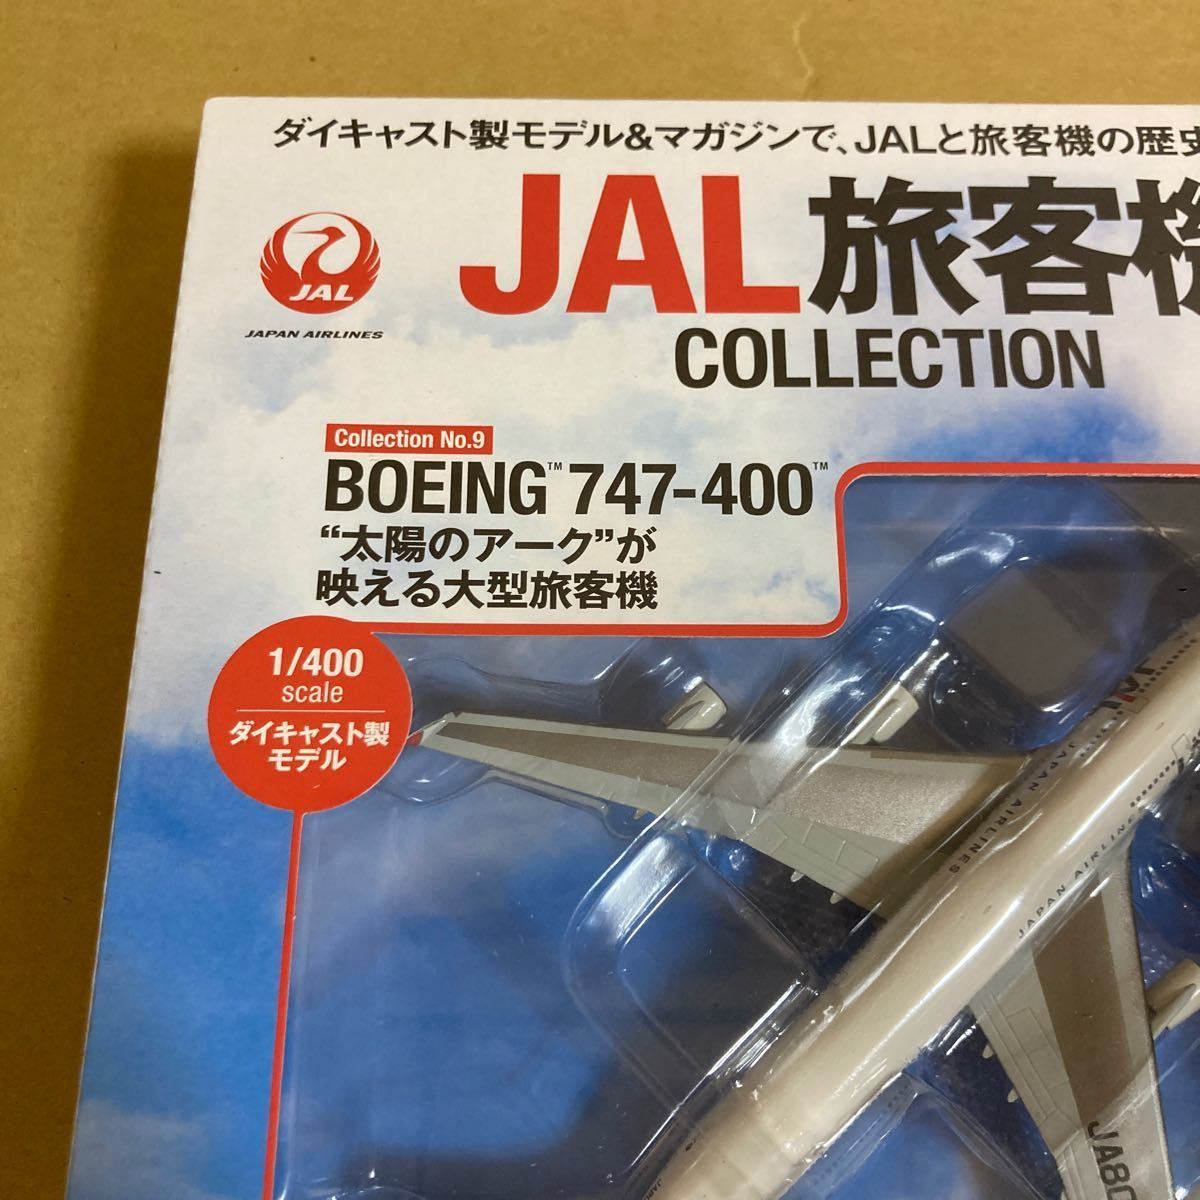 * new goods *# der Goss tea niJAL passenger plane collection NO.9 1/400 JAL B747-400 arc painting #bo- wing Japan Air Lines 